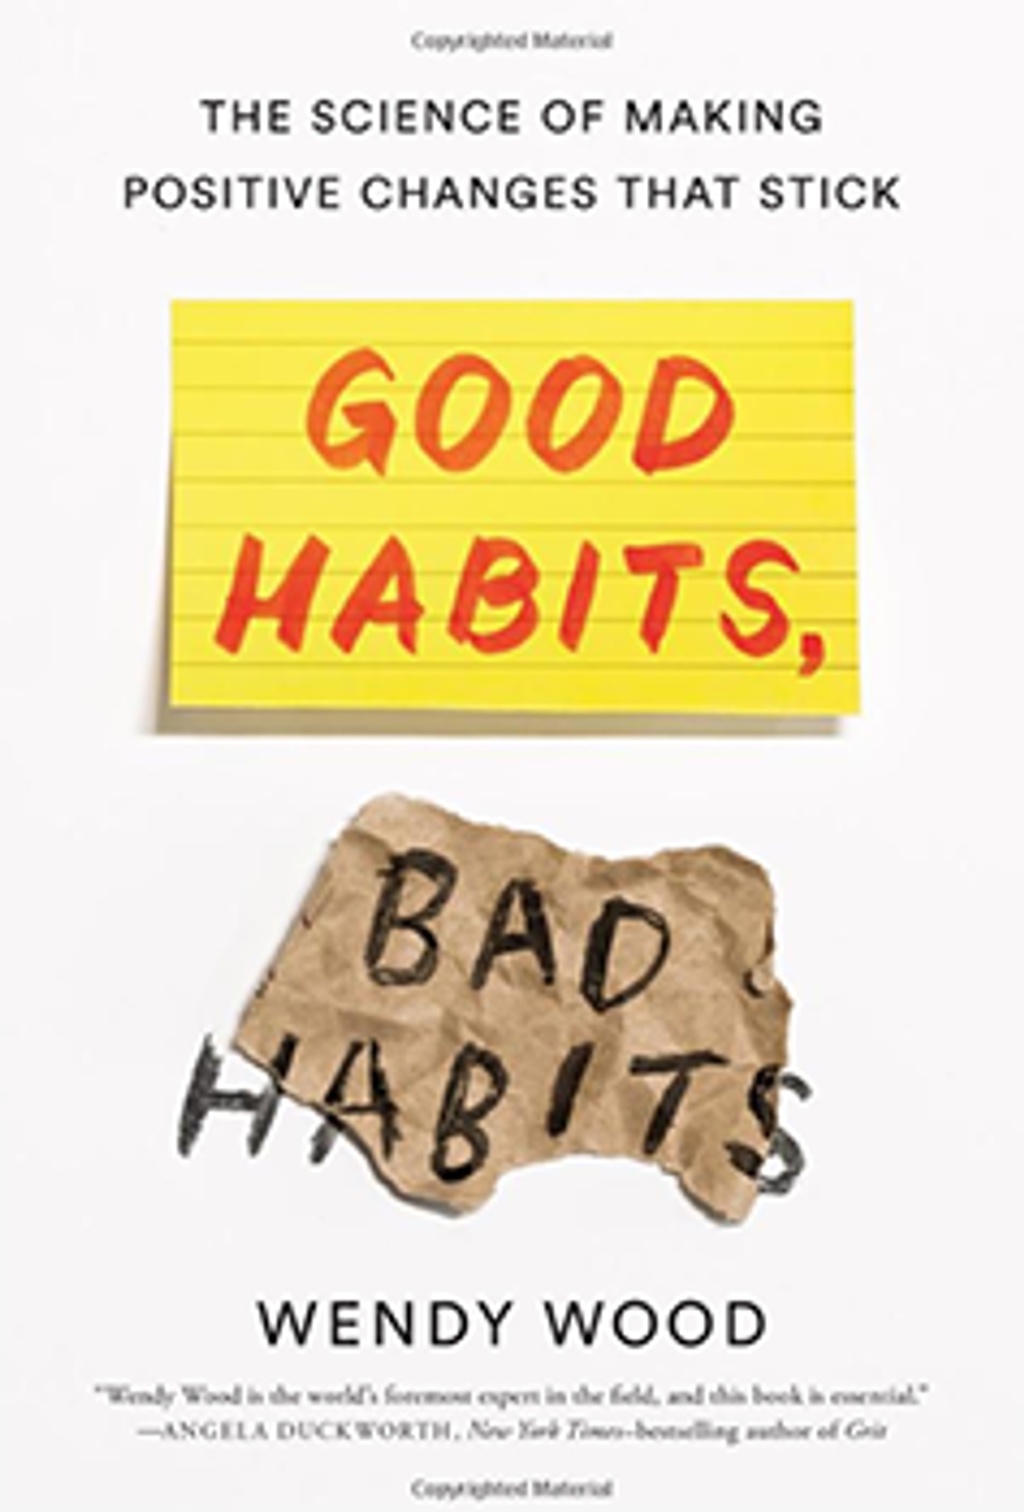 Good habits, bad habits book by Wendy Wood